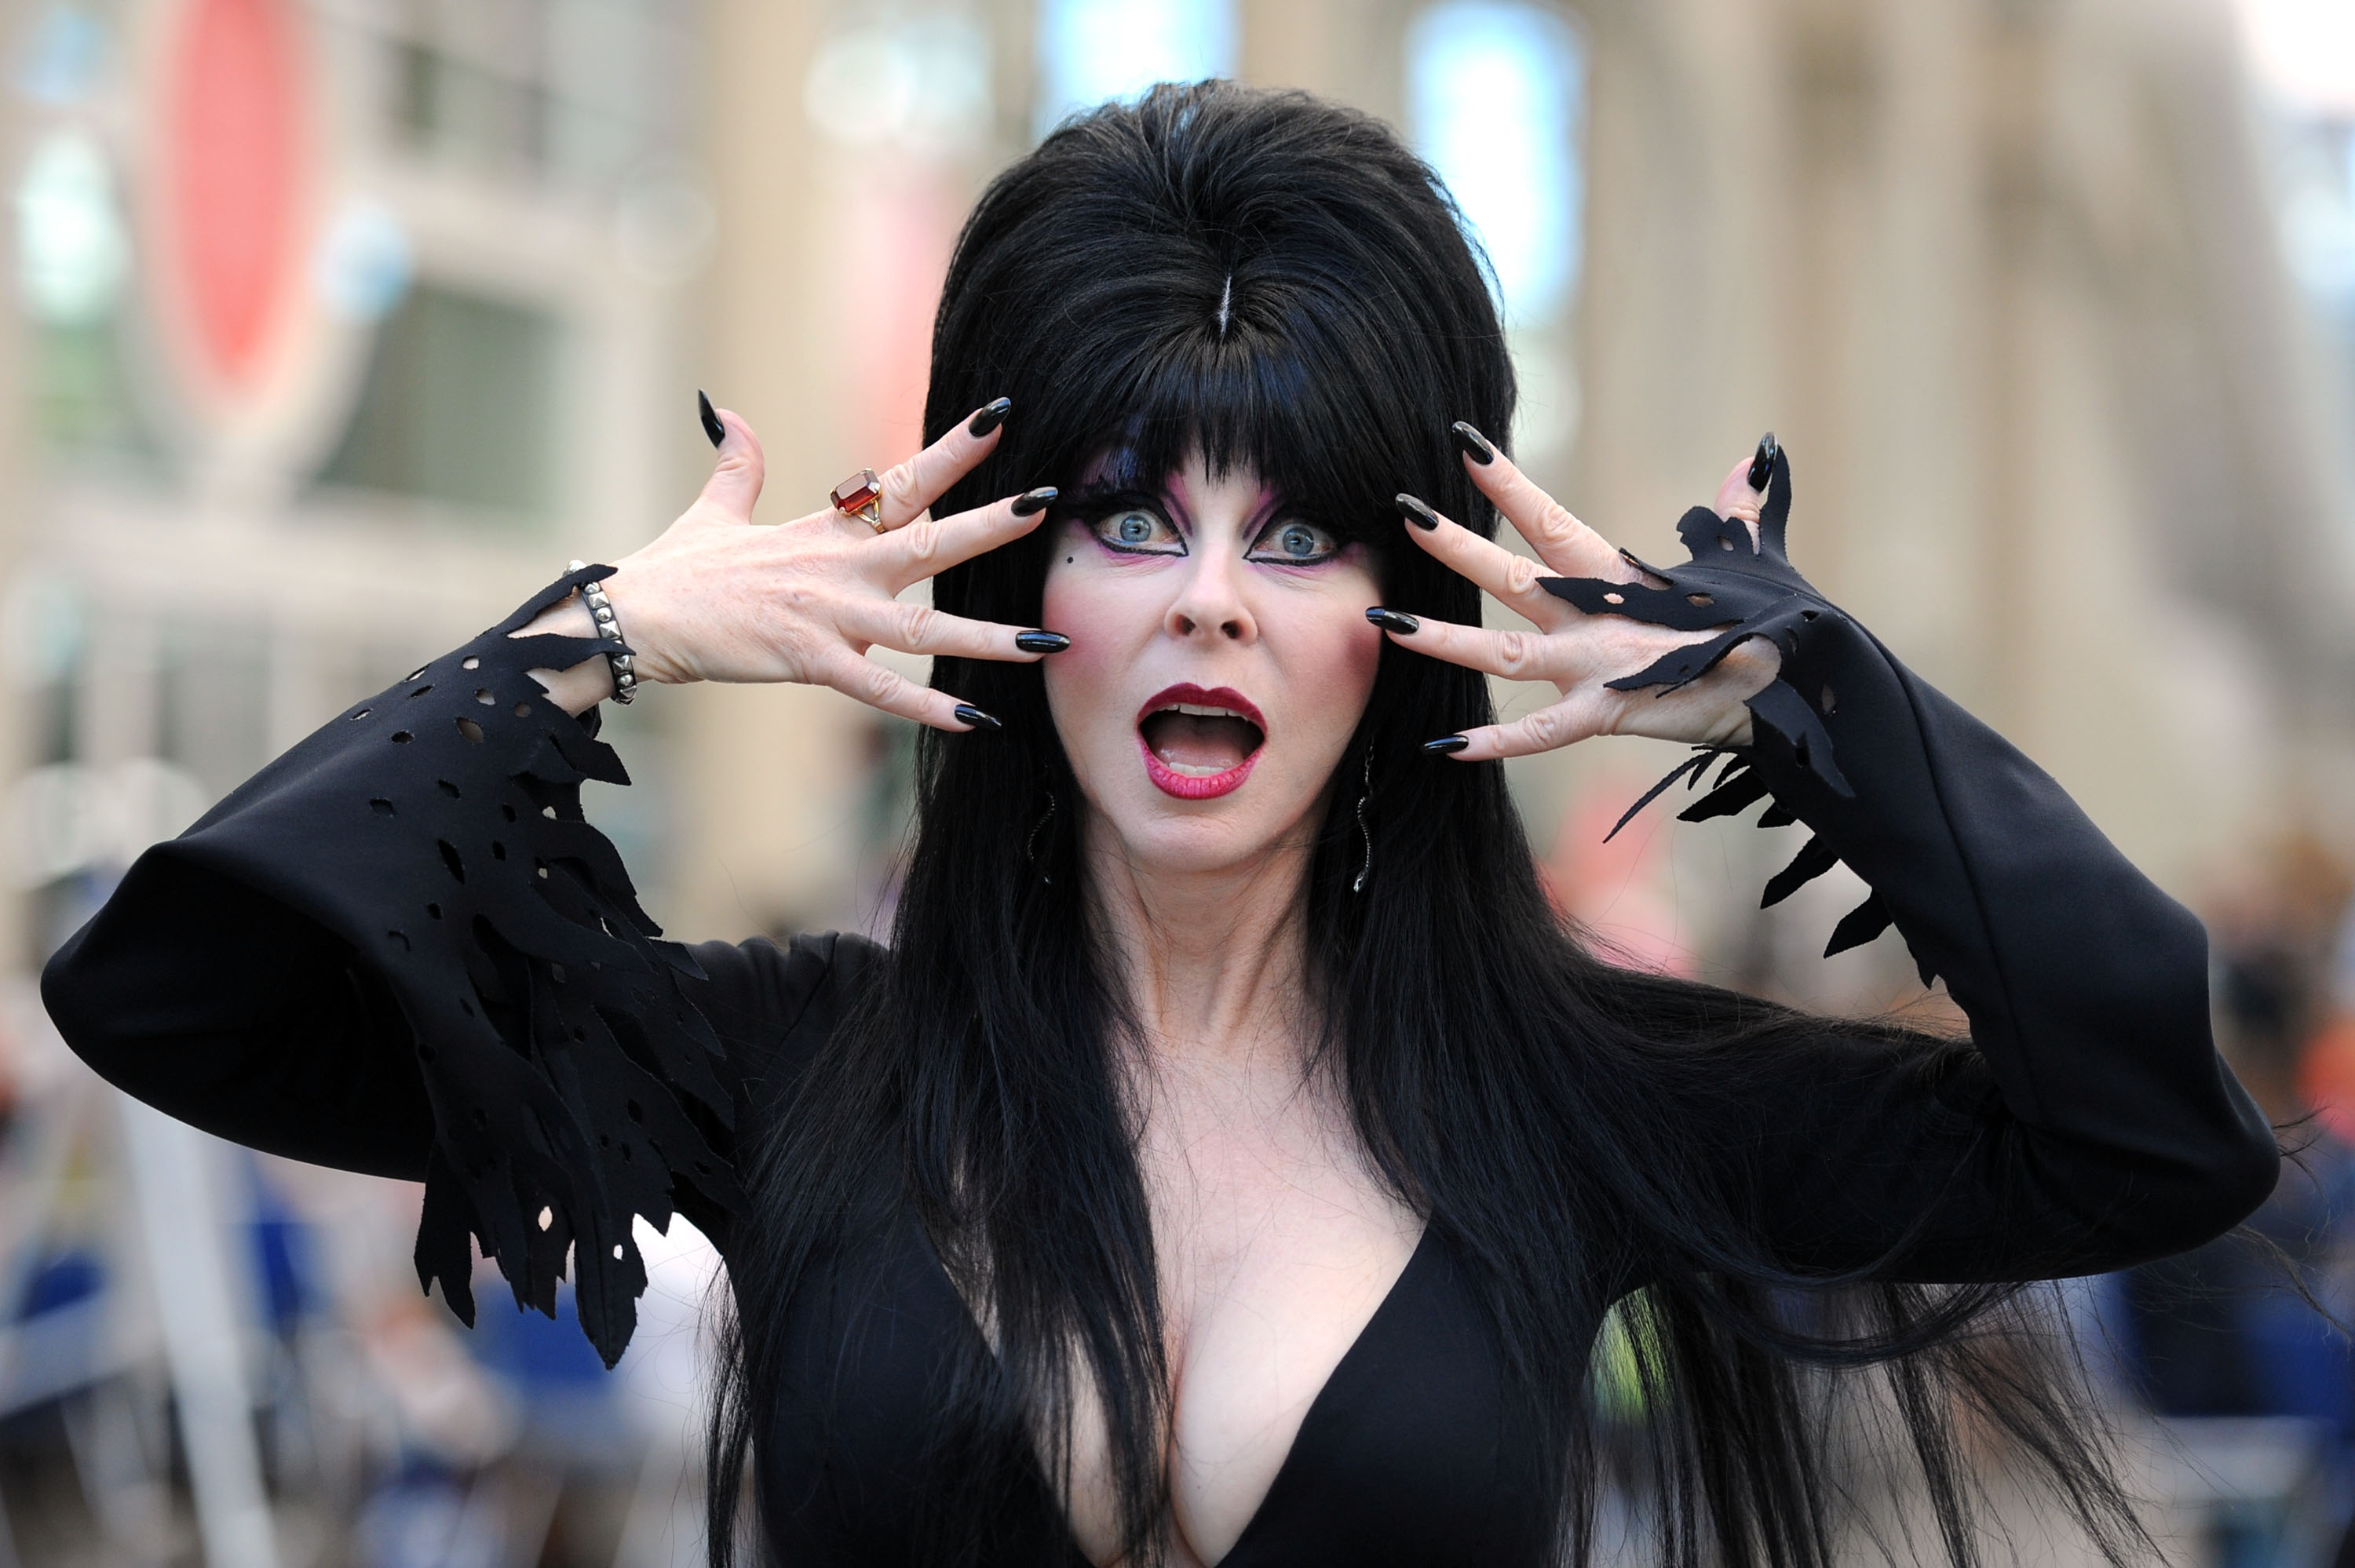 This Friday 8am - Elvira, Mistress of the Dark (official